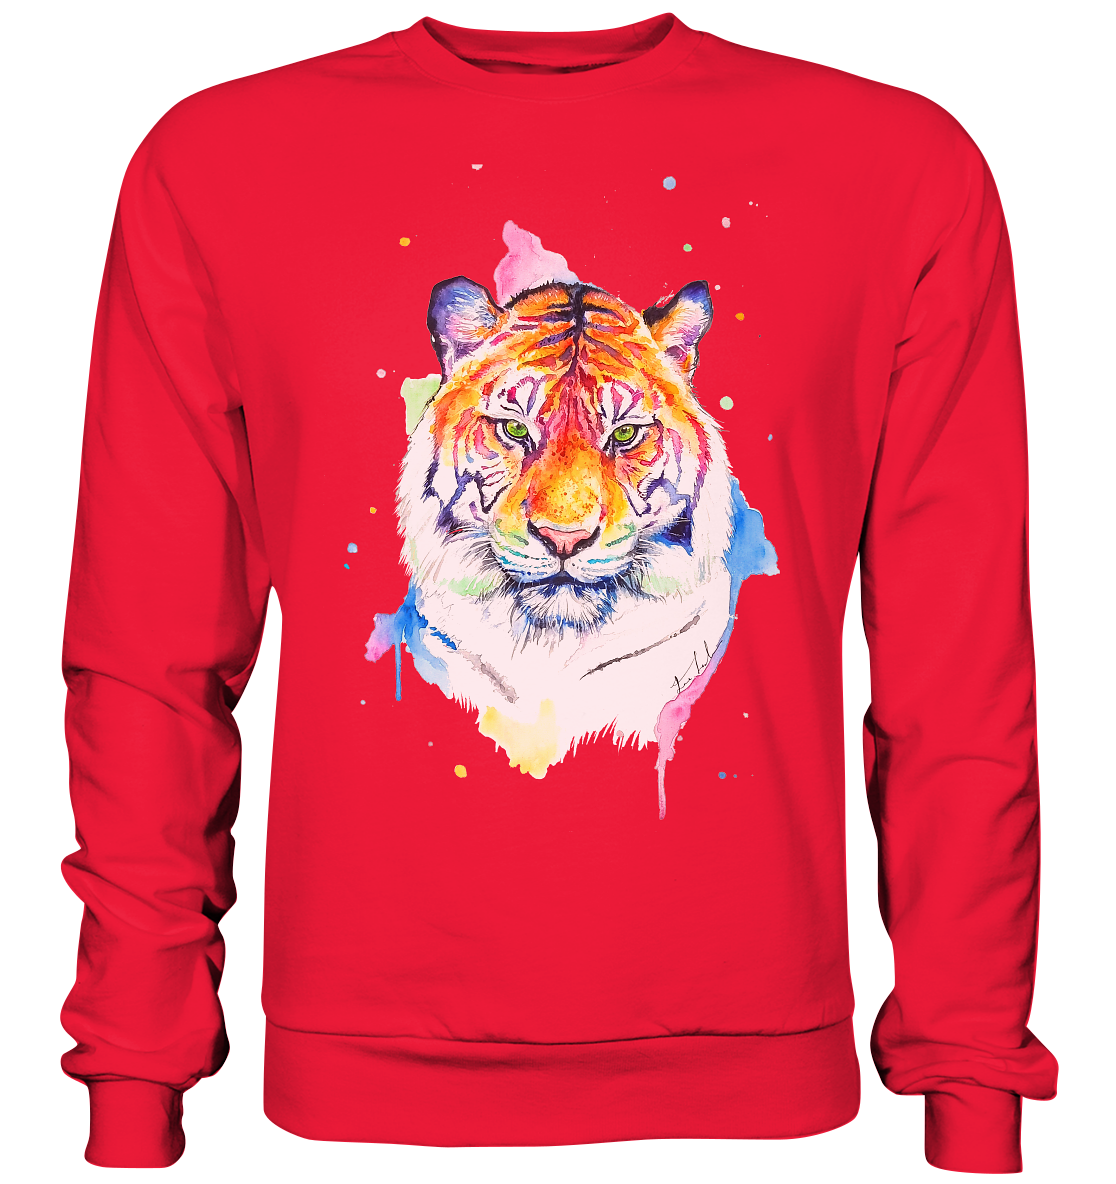 Bunter Tiger - Premium Sweatshirt